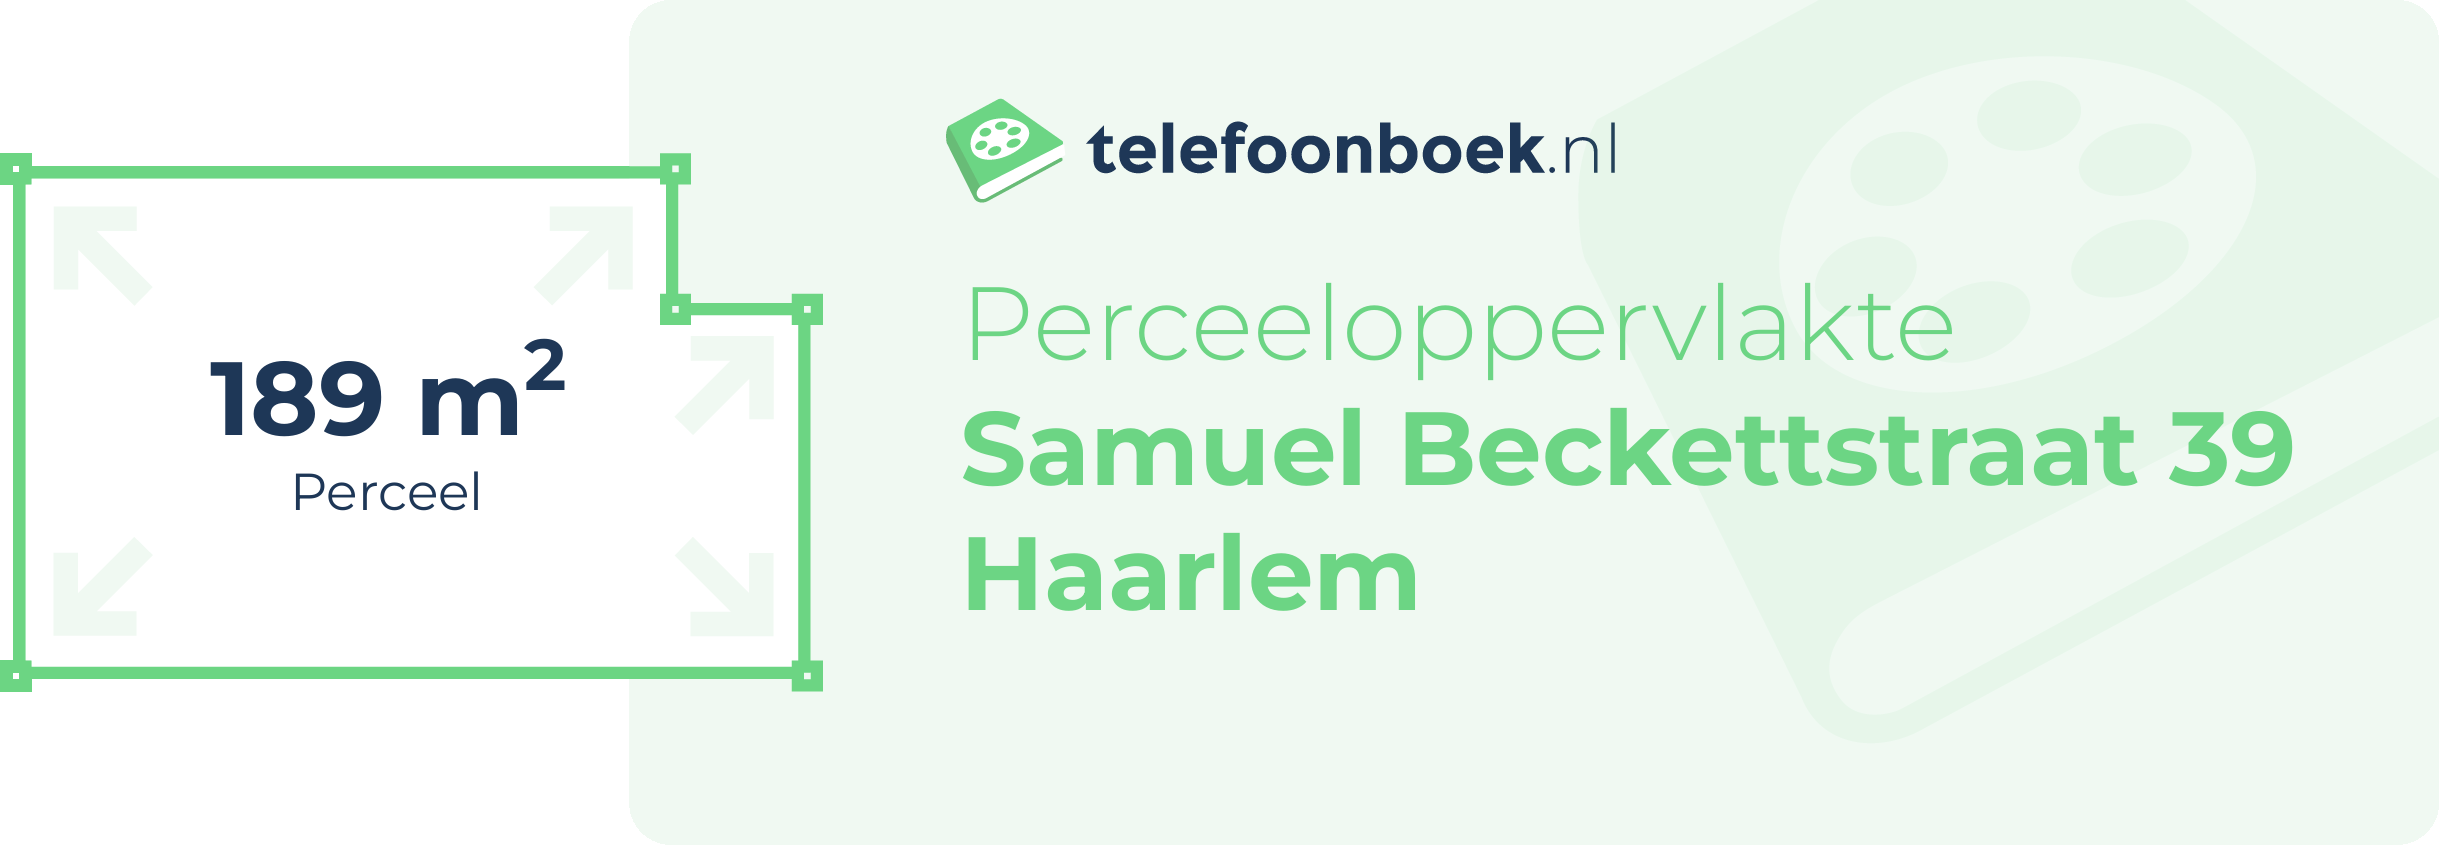 Perceeloppervlakte Samuel Beckettstraat 39 Haarlem